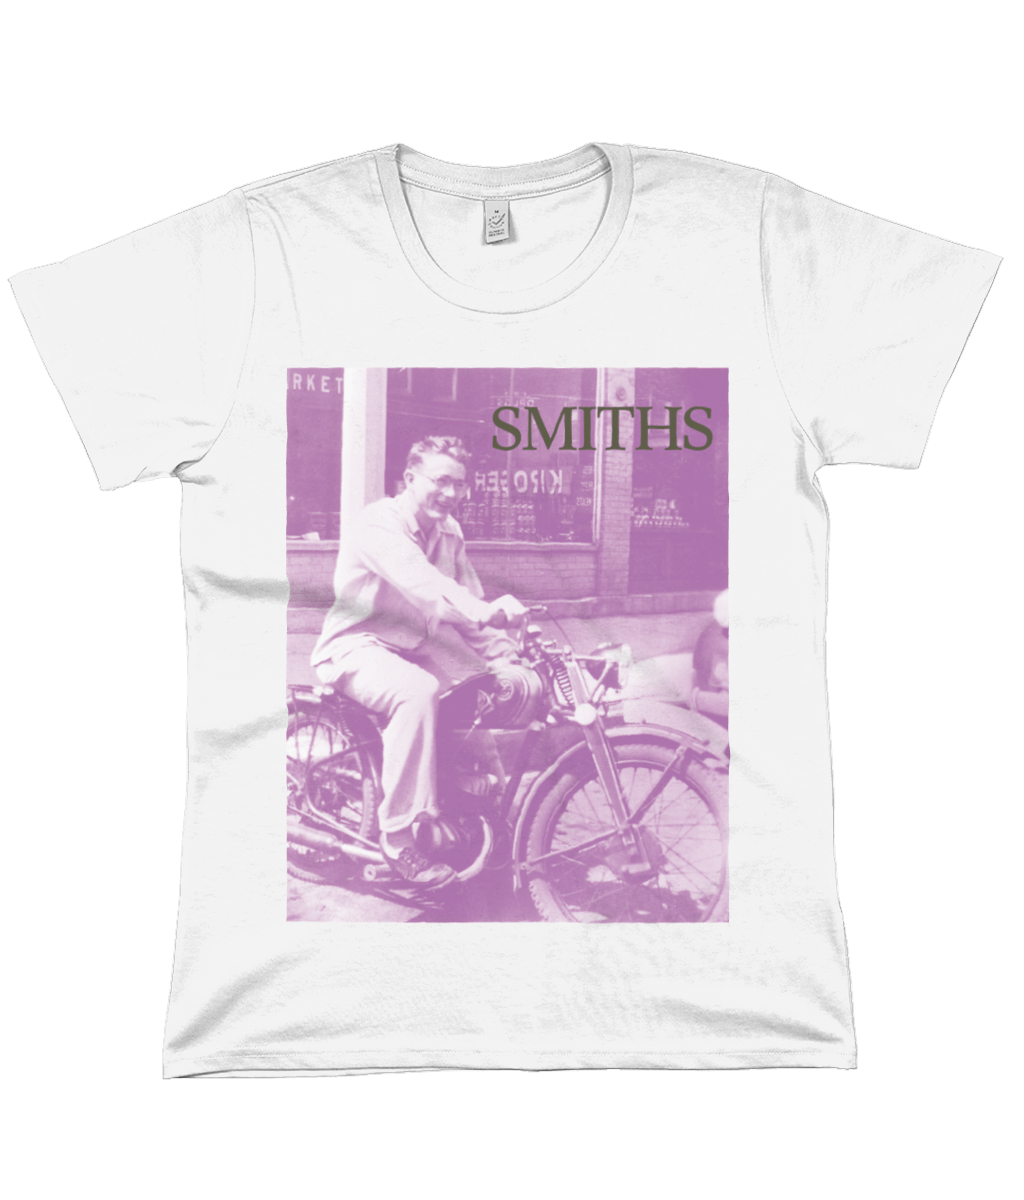 THE SMITHS - Bigmouth Strikes Again - 1986 - Promo - Women's T Shirt